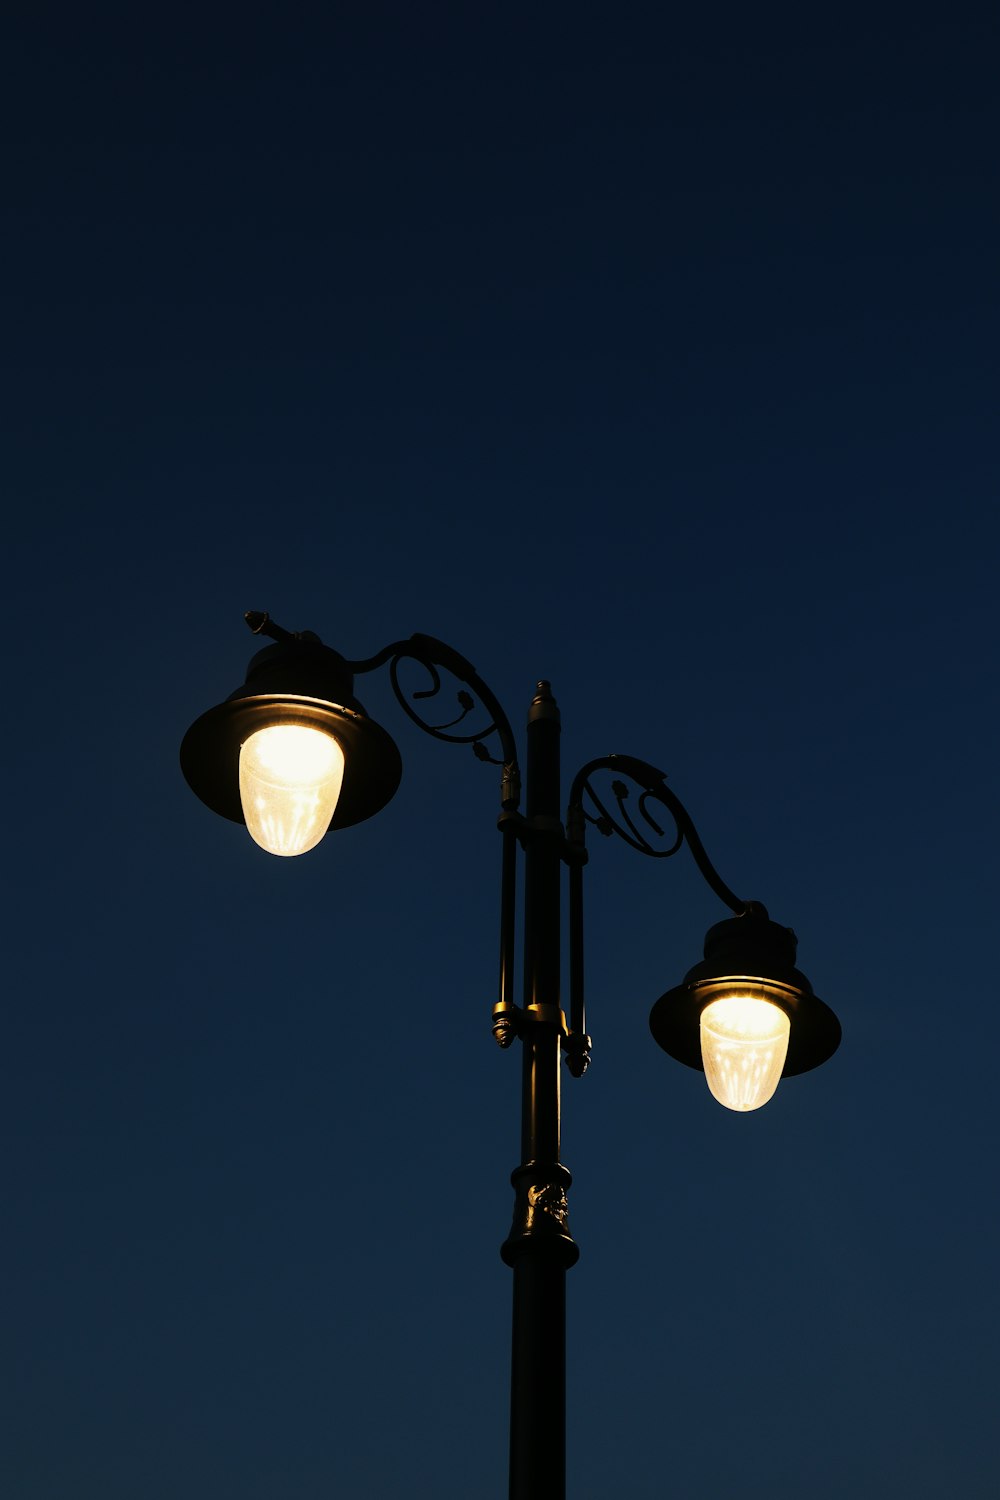 750+ Street Light Pictures [HQ] | Download Free Images on Unsplash